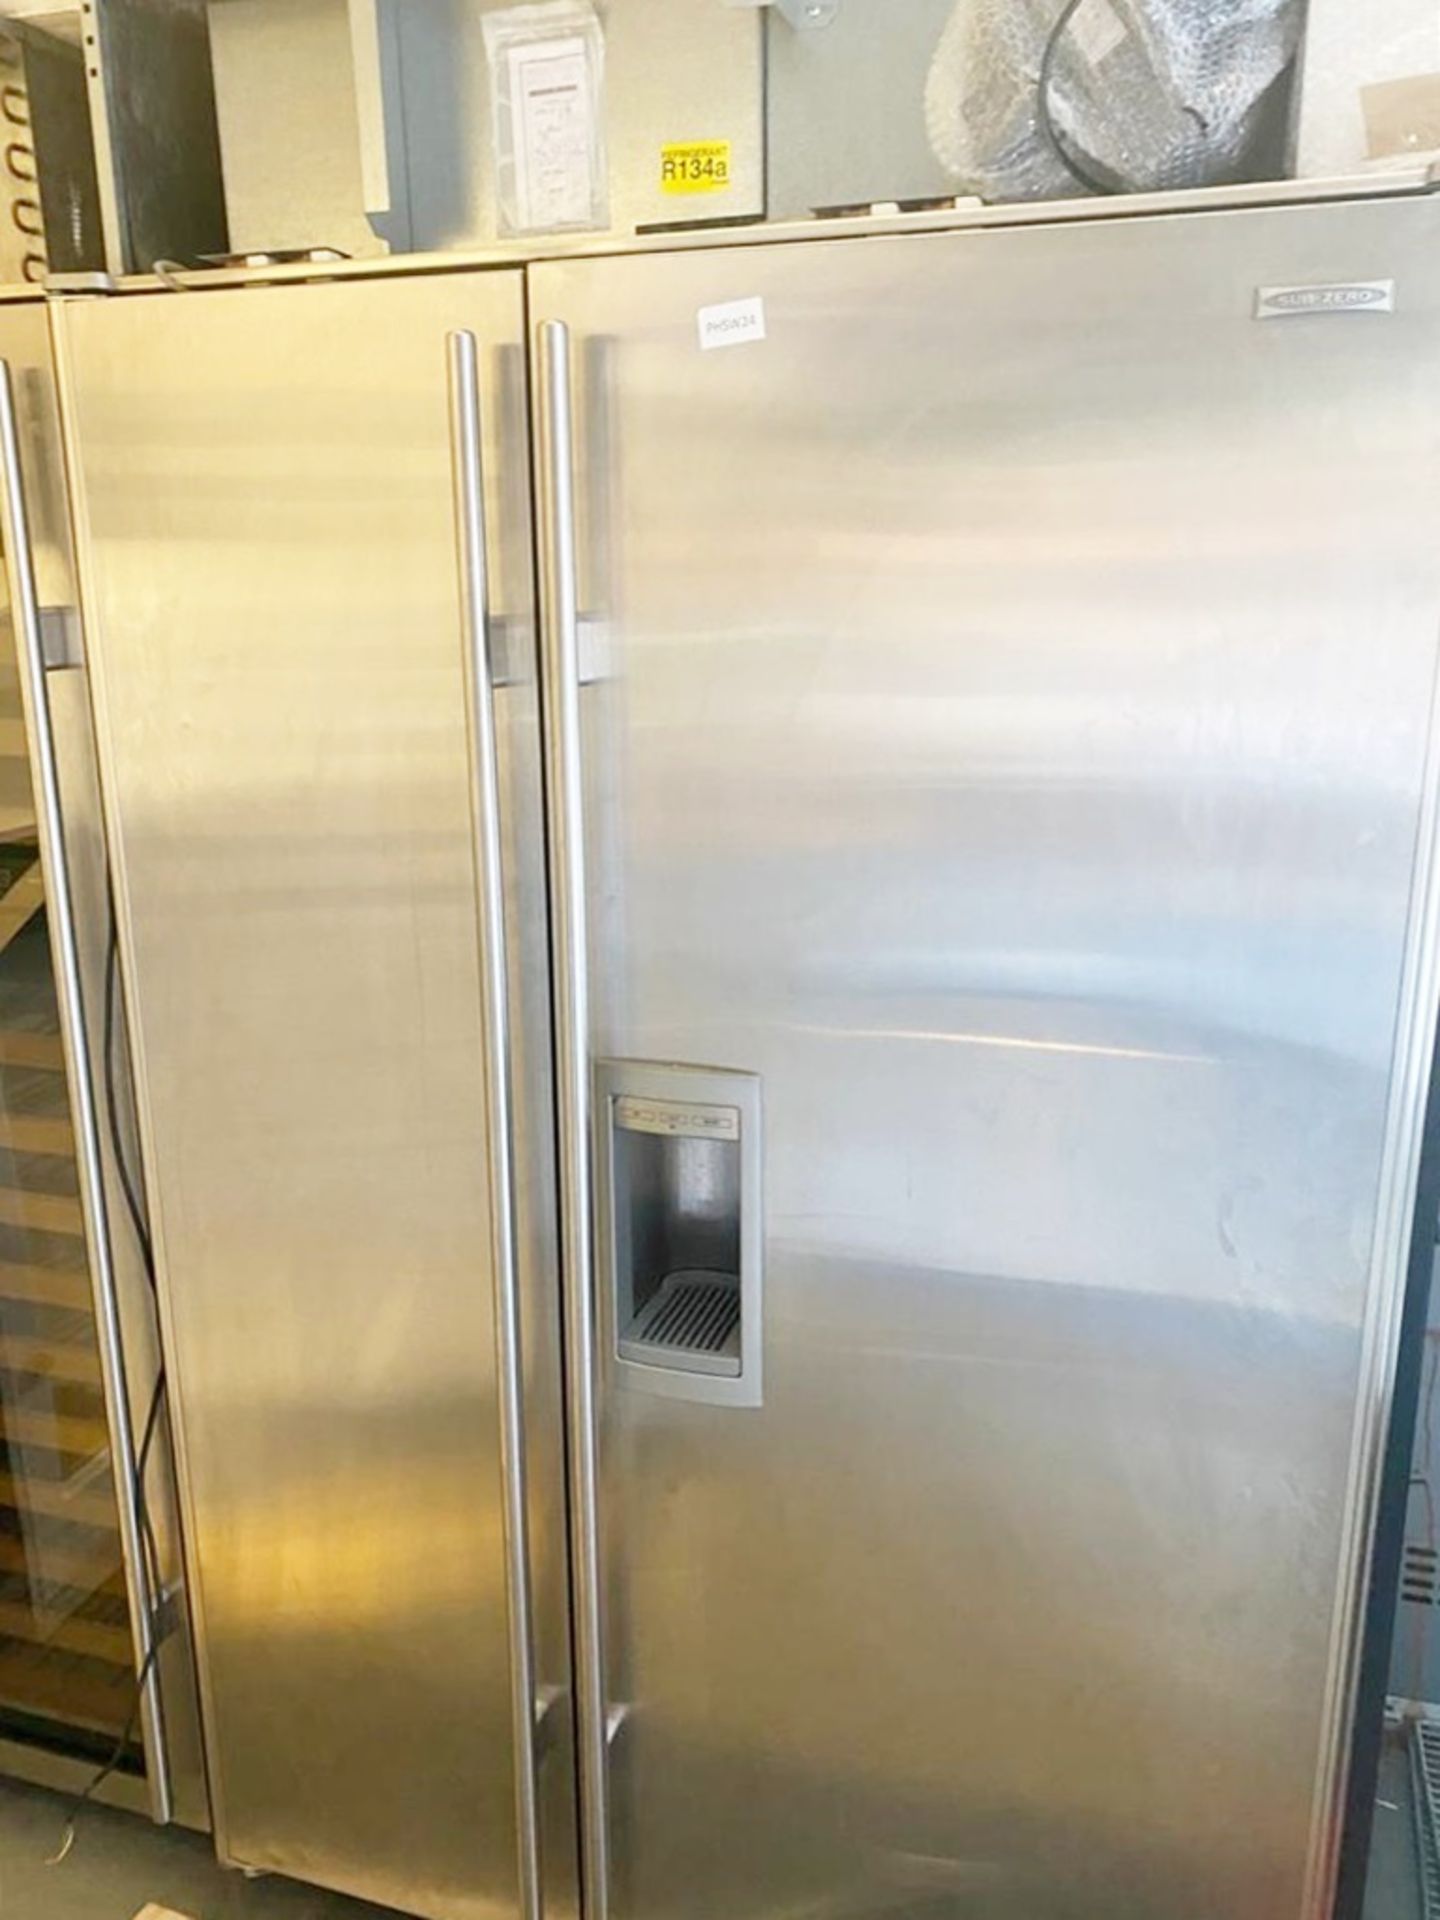 1 x Subzero 695 American Style Fridge Freezer With Ice and Water Dispenser - Image 2 of 4